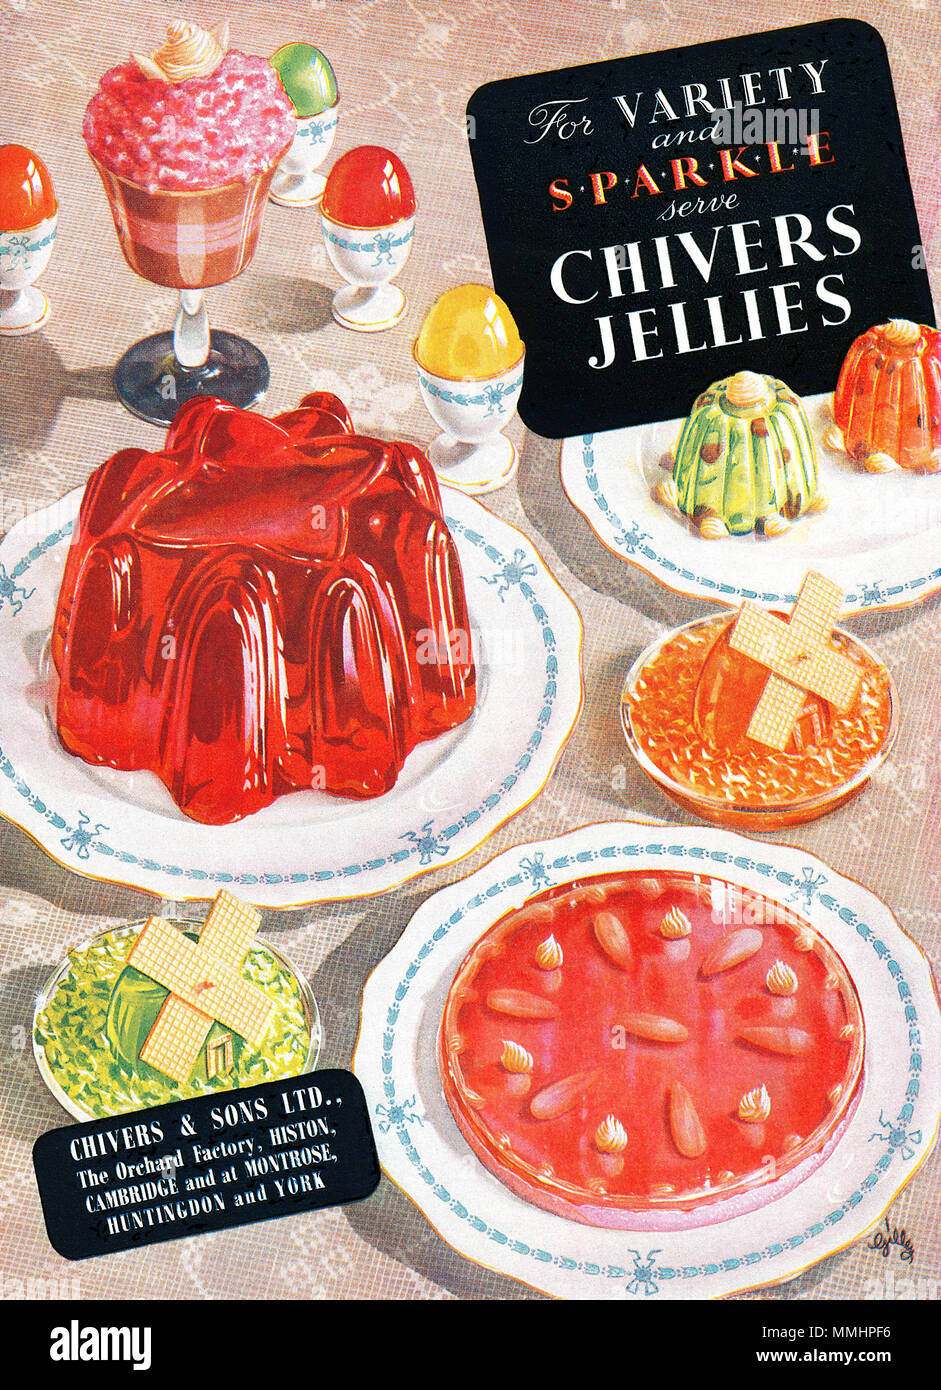 1950 British advertisement for Chivers Jellies. Stock Photo